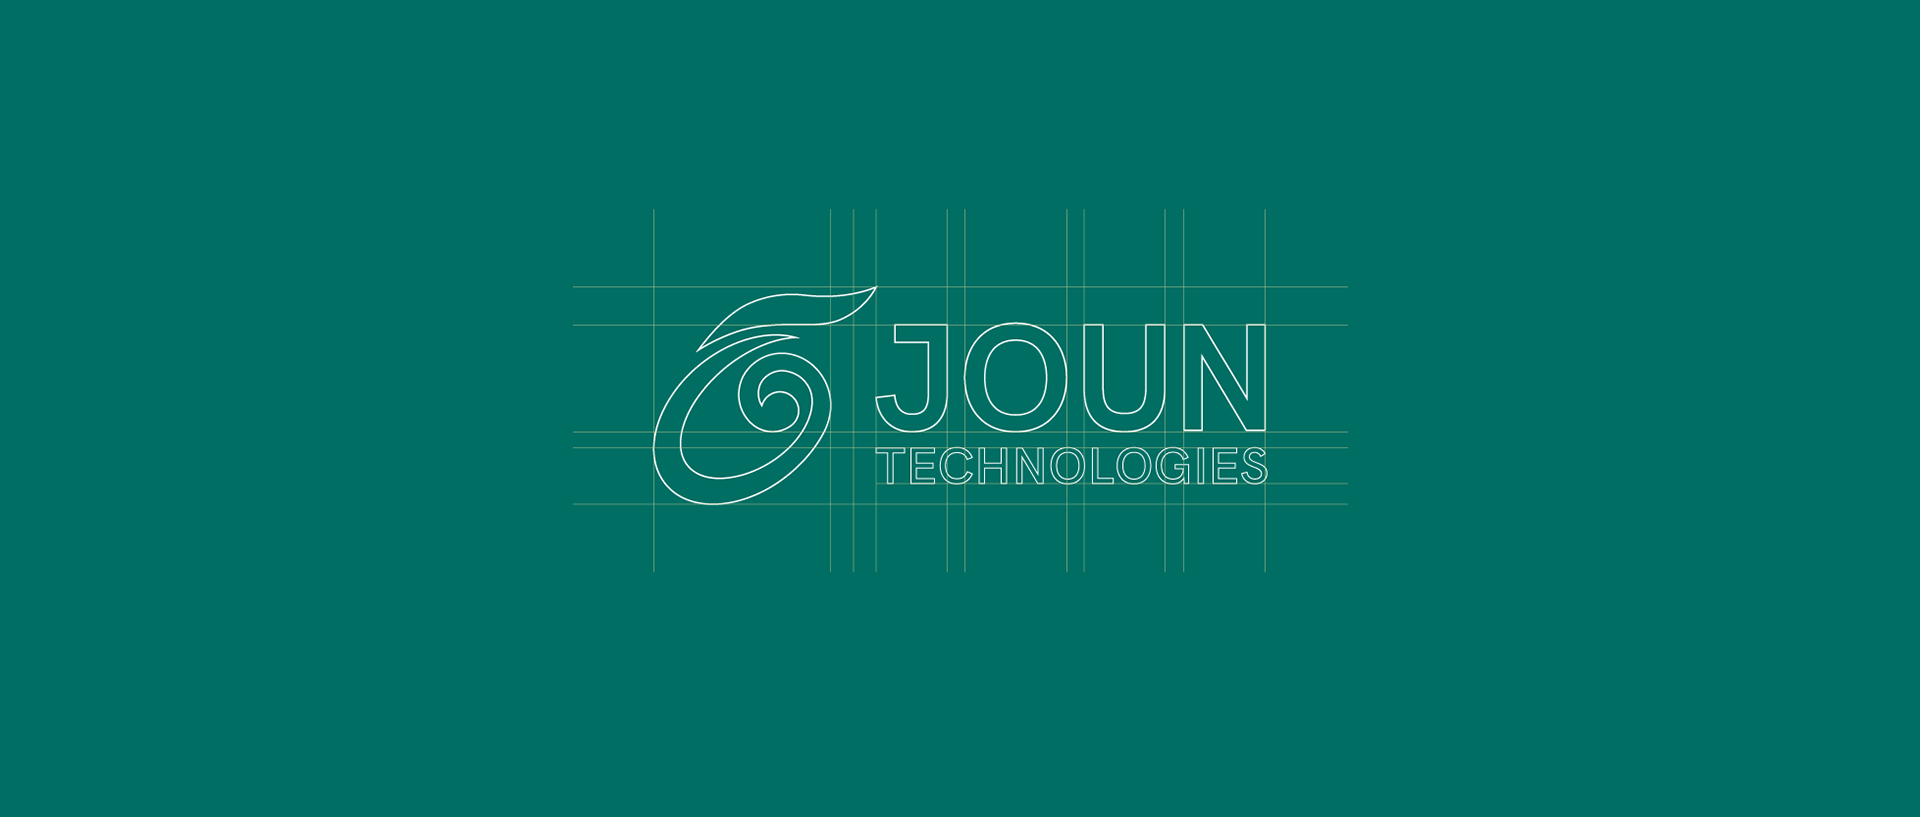 joun-technologies_brandmark_grid